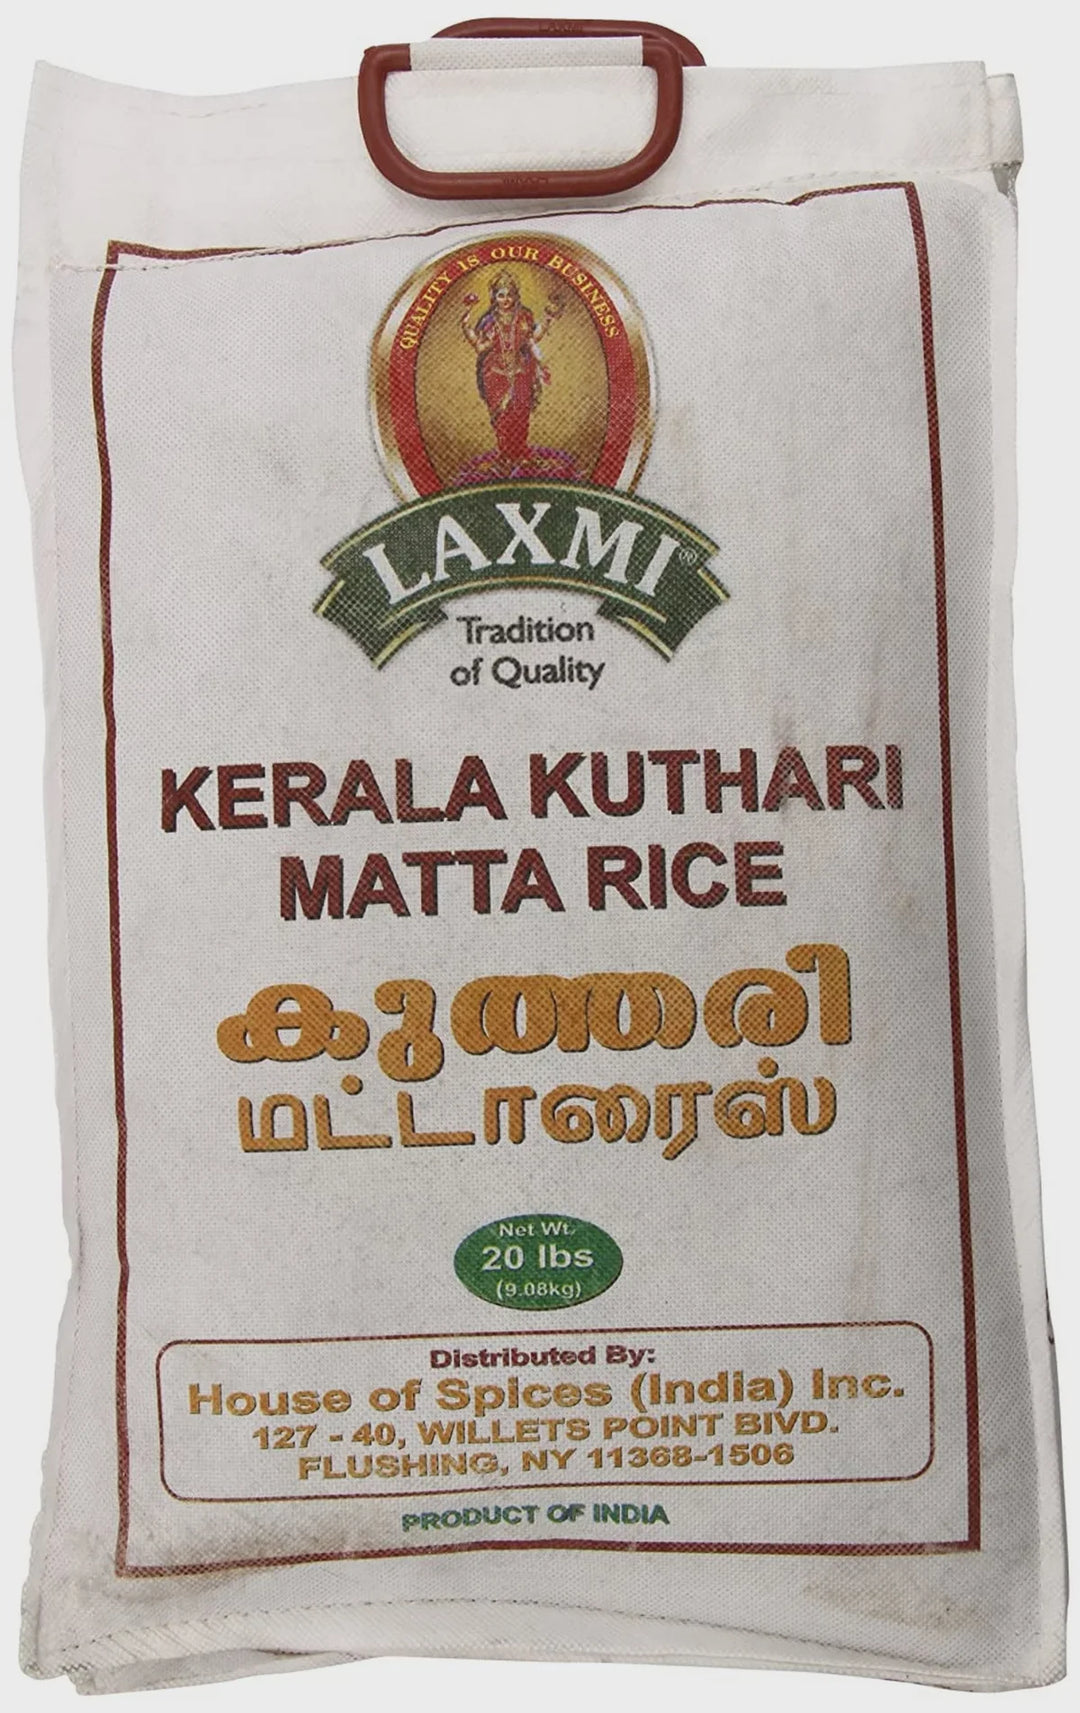 Laxmi Kerala Kuthari Matta Rice 20lb